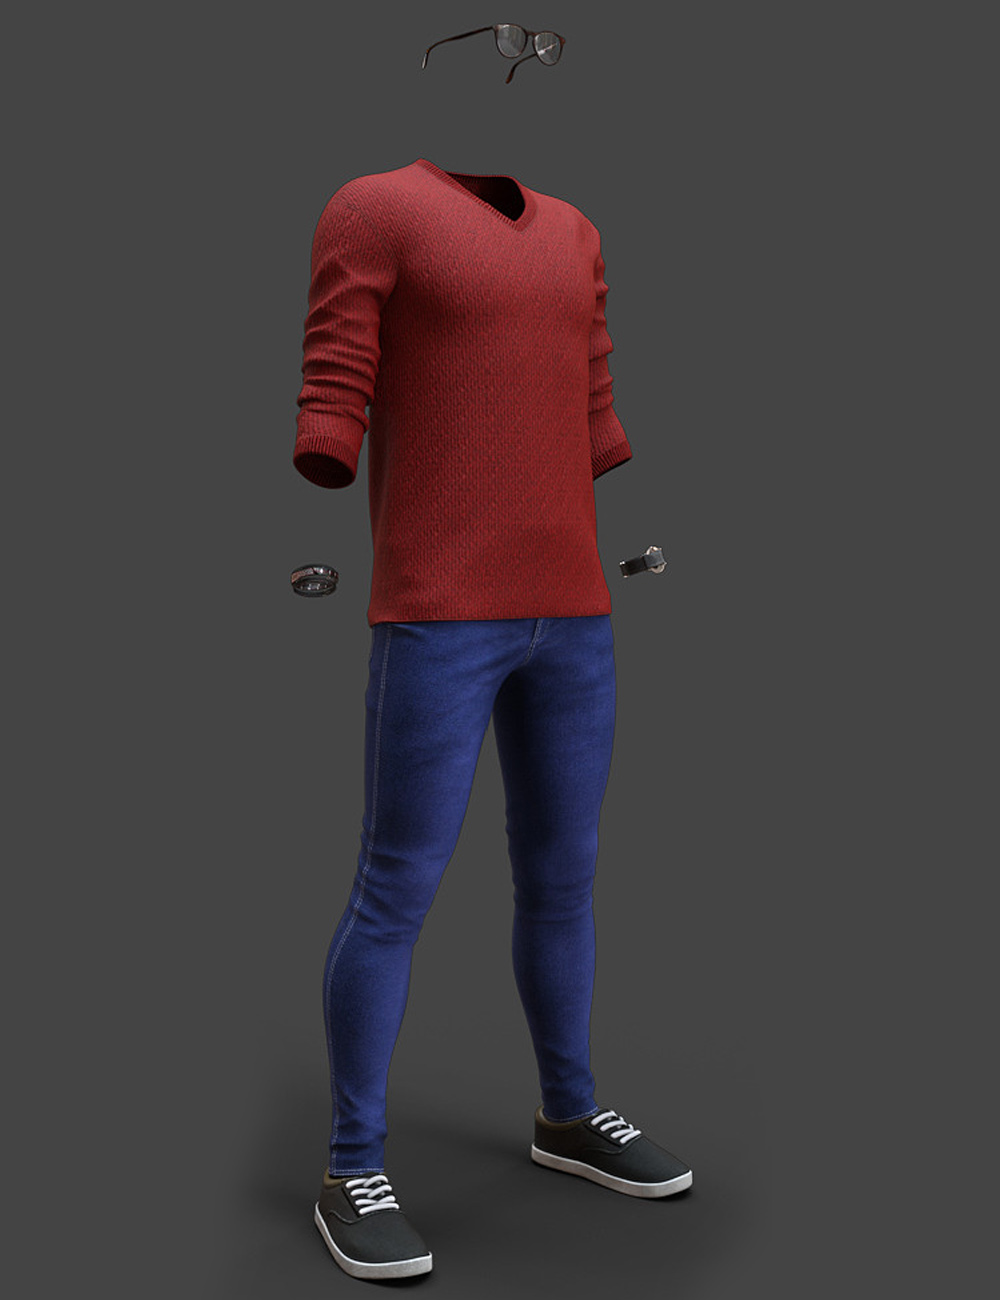 Metropolitan Fashion for Genesis 8.1 Males by: SadeRedCrow3DArtOdyssey, 3D Models by Daz 3D